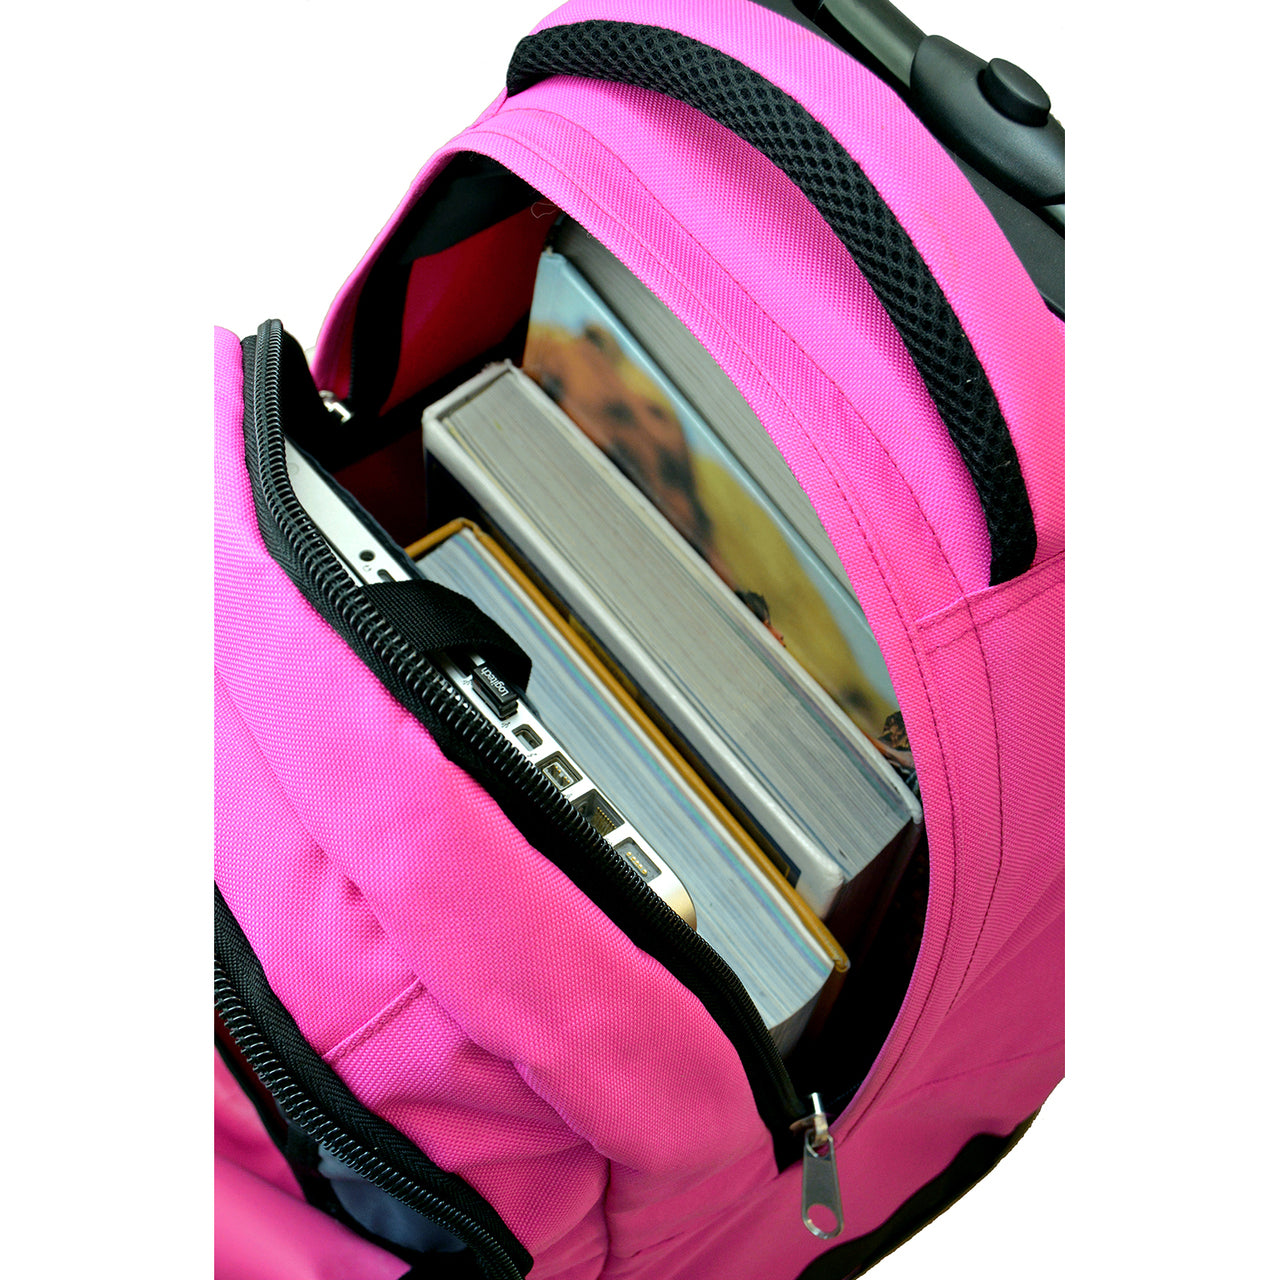 Phoenix Suns Premium Wheeled Backpack in Pink